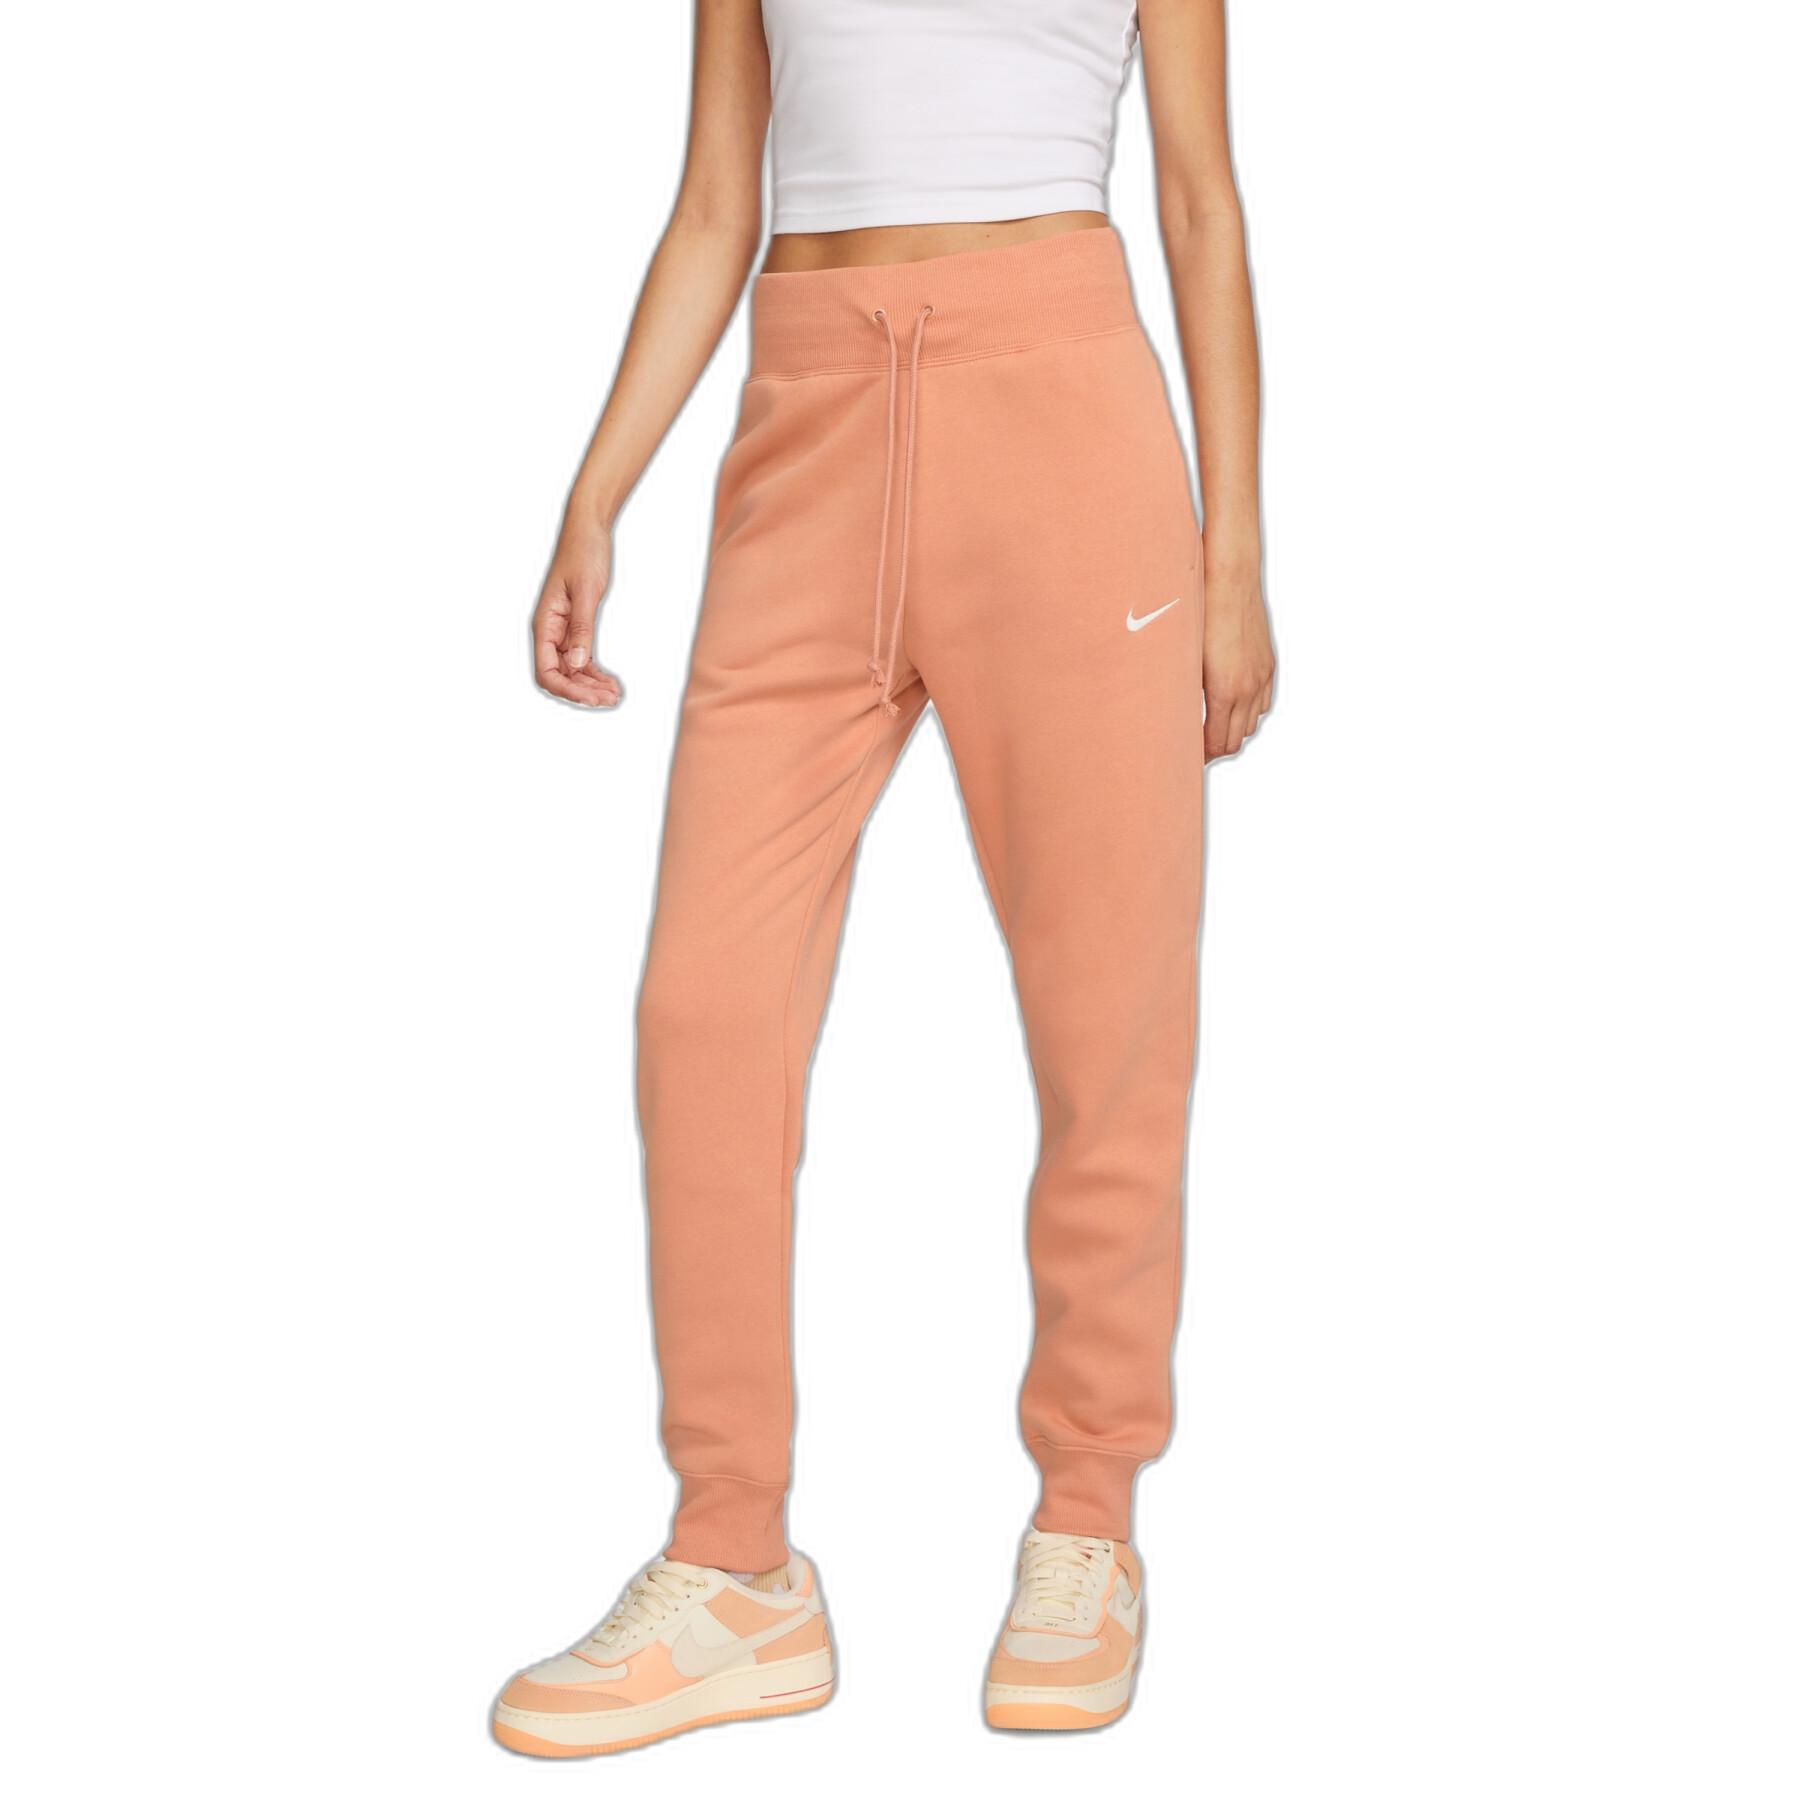 Women's high-waisted jogging suit Nike Phoenix Fleece STD